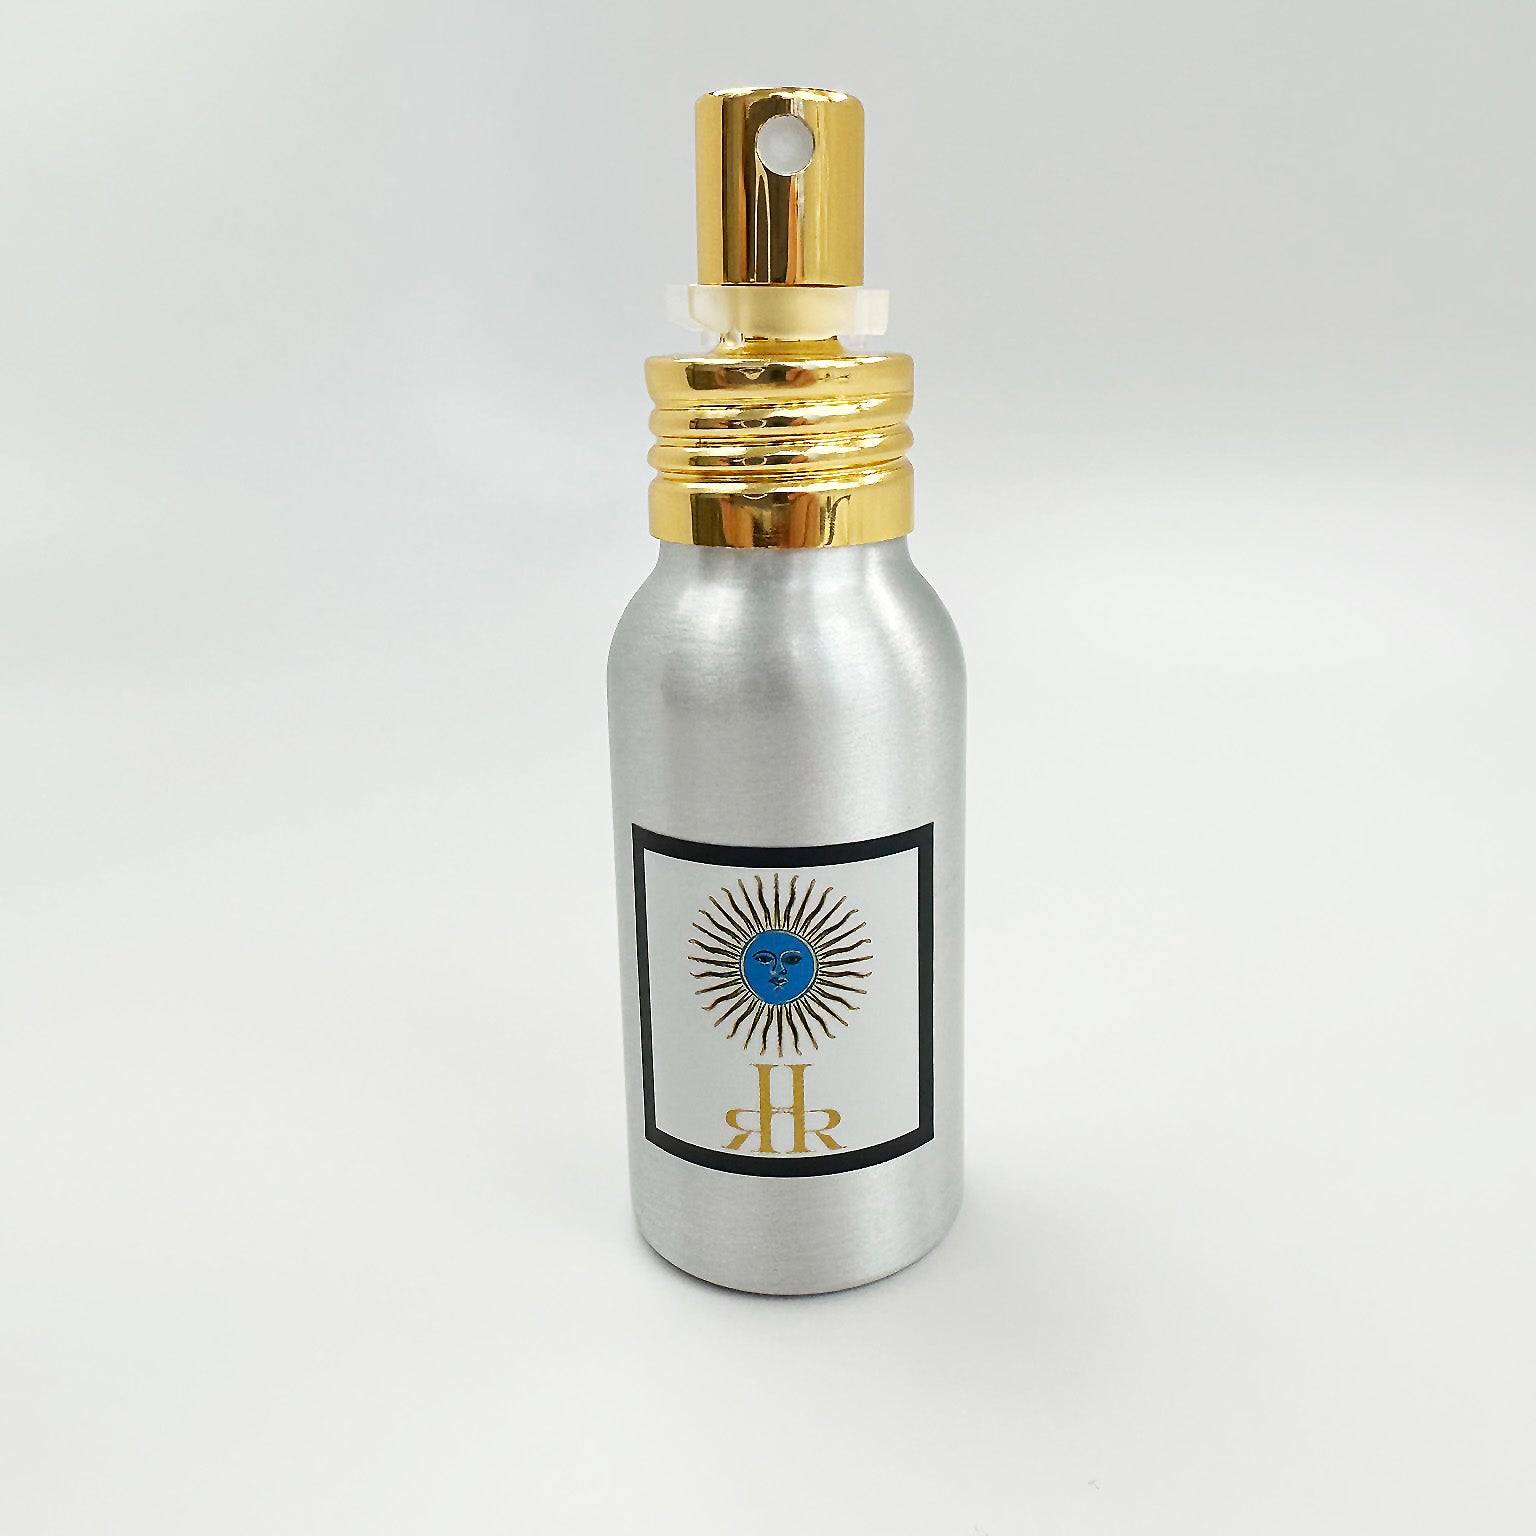 Atlántico Travel Room Spray - RHR Luxury Home Fragrance